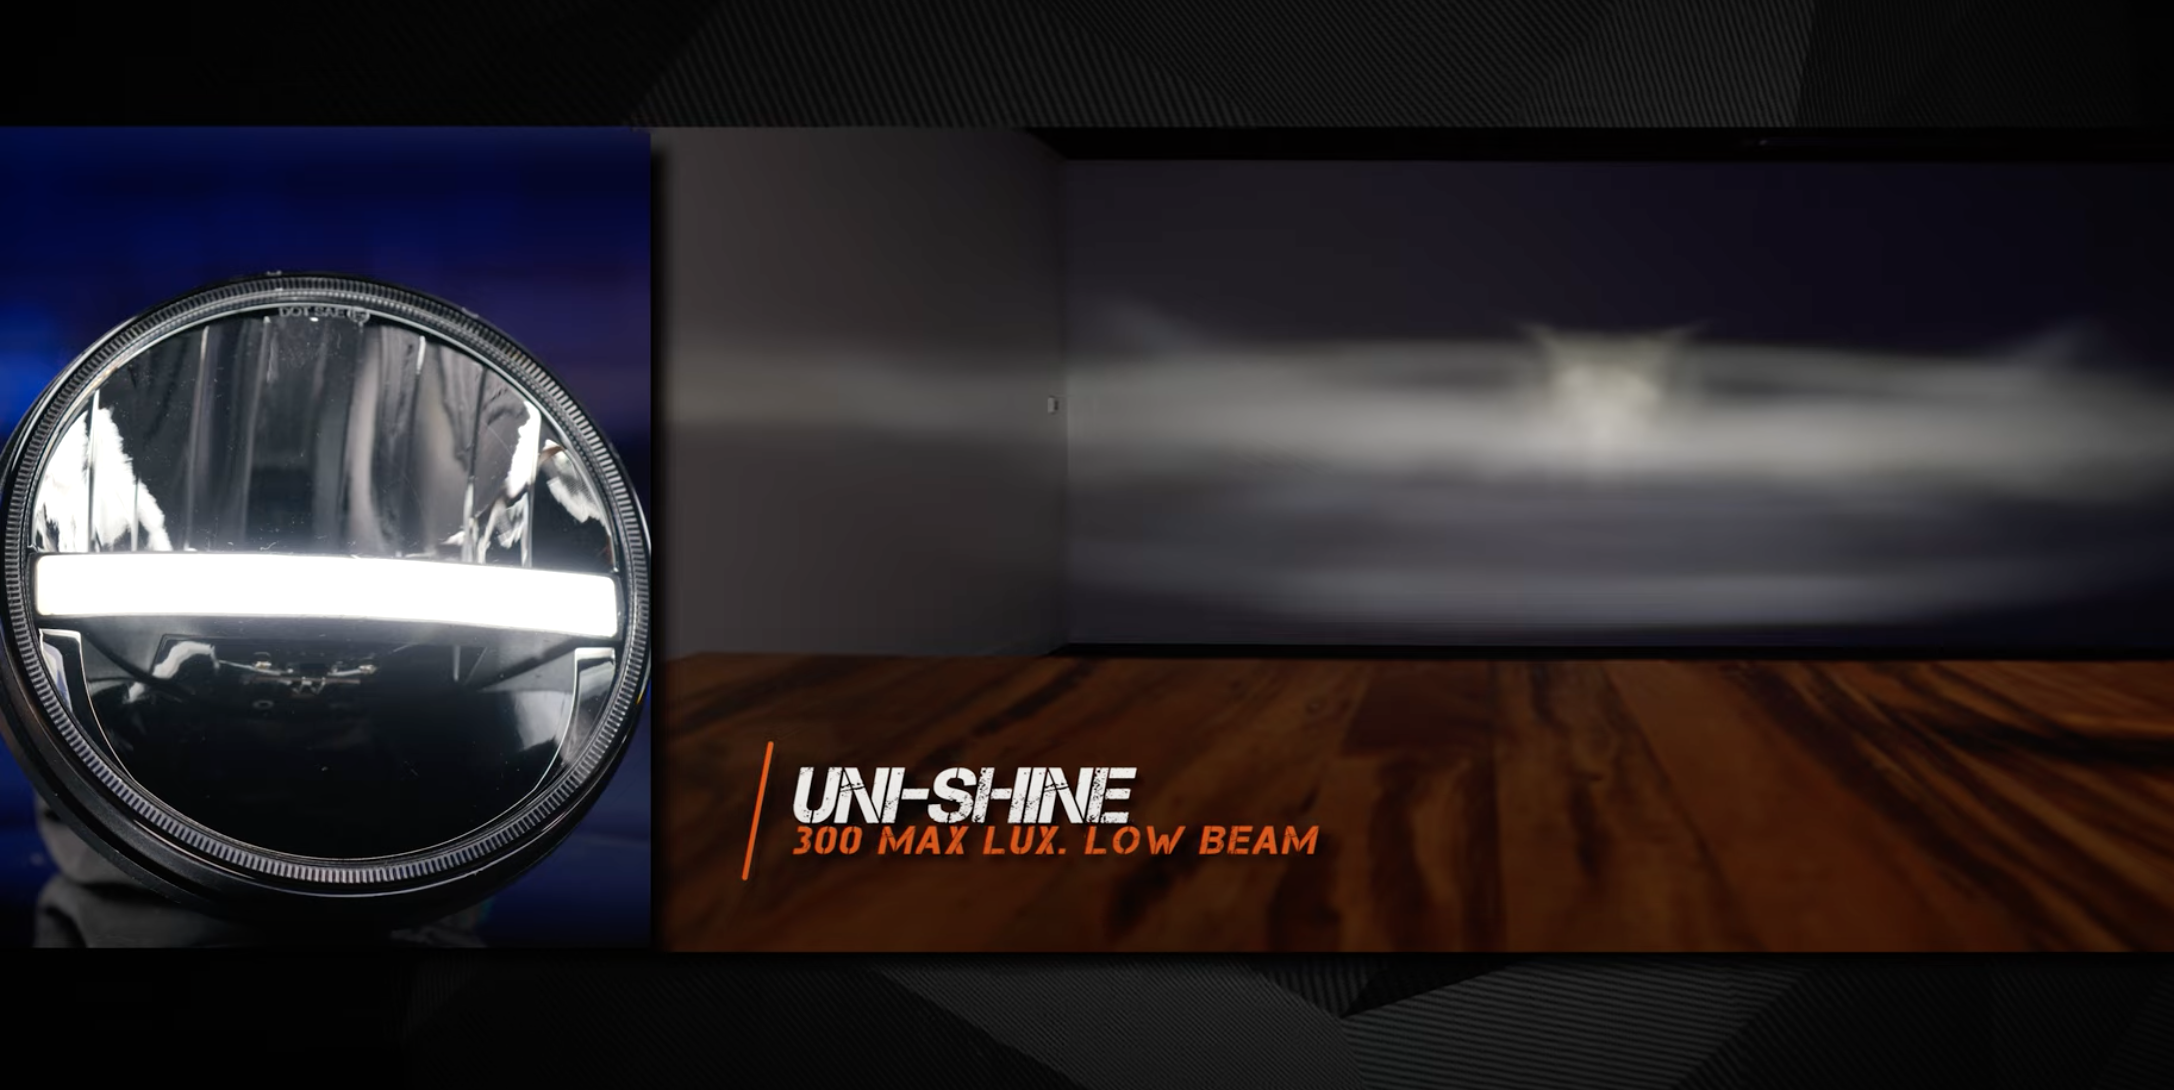 Uni-shine Comparison Test Motorcycle Jeep Wrangler 7-Inch Round LED Headlight